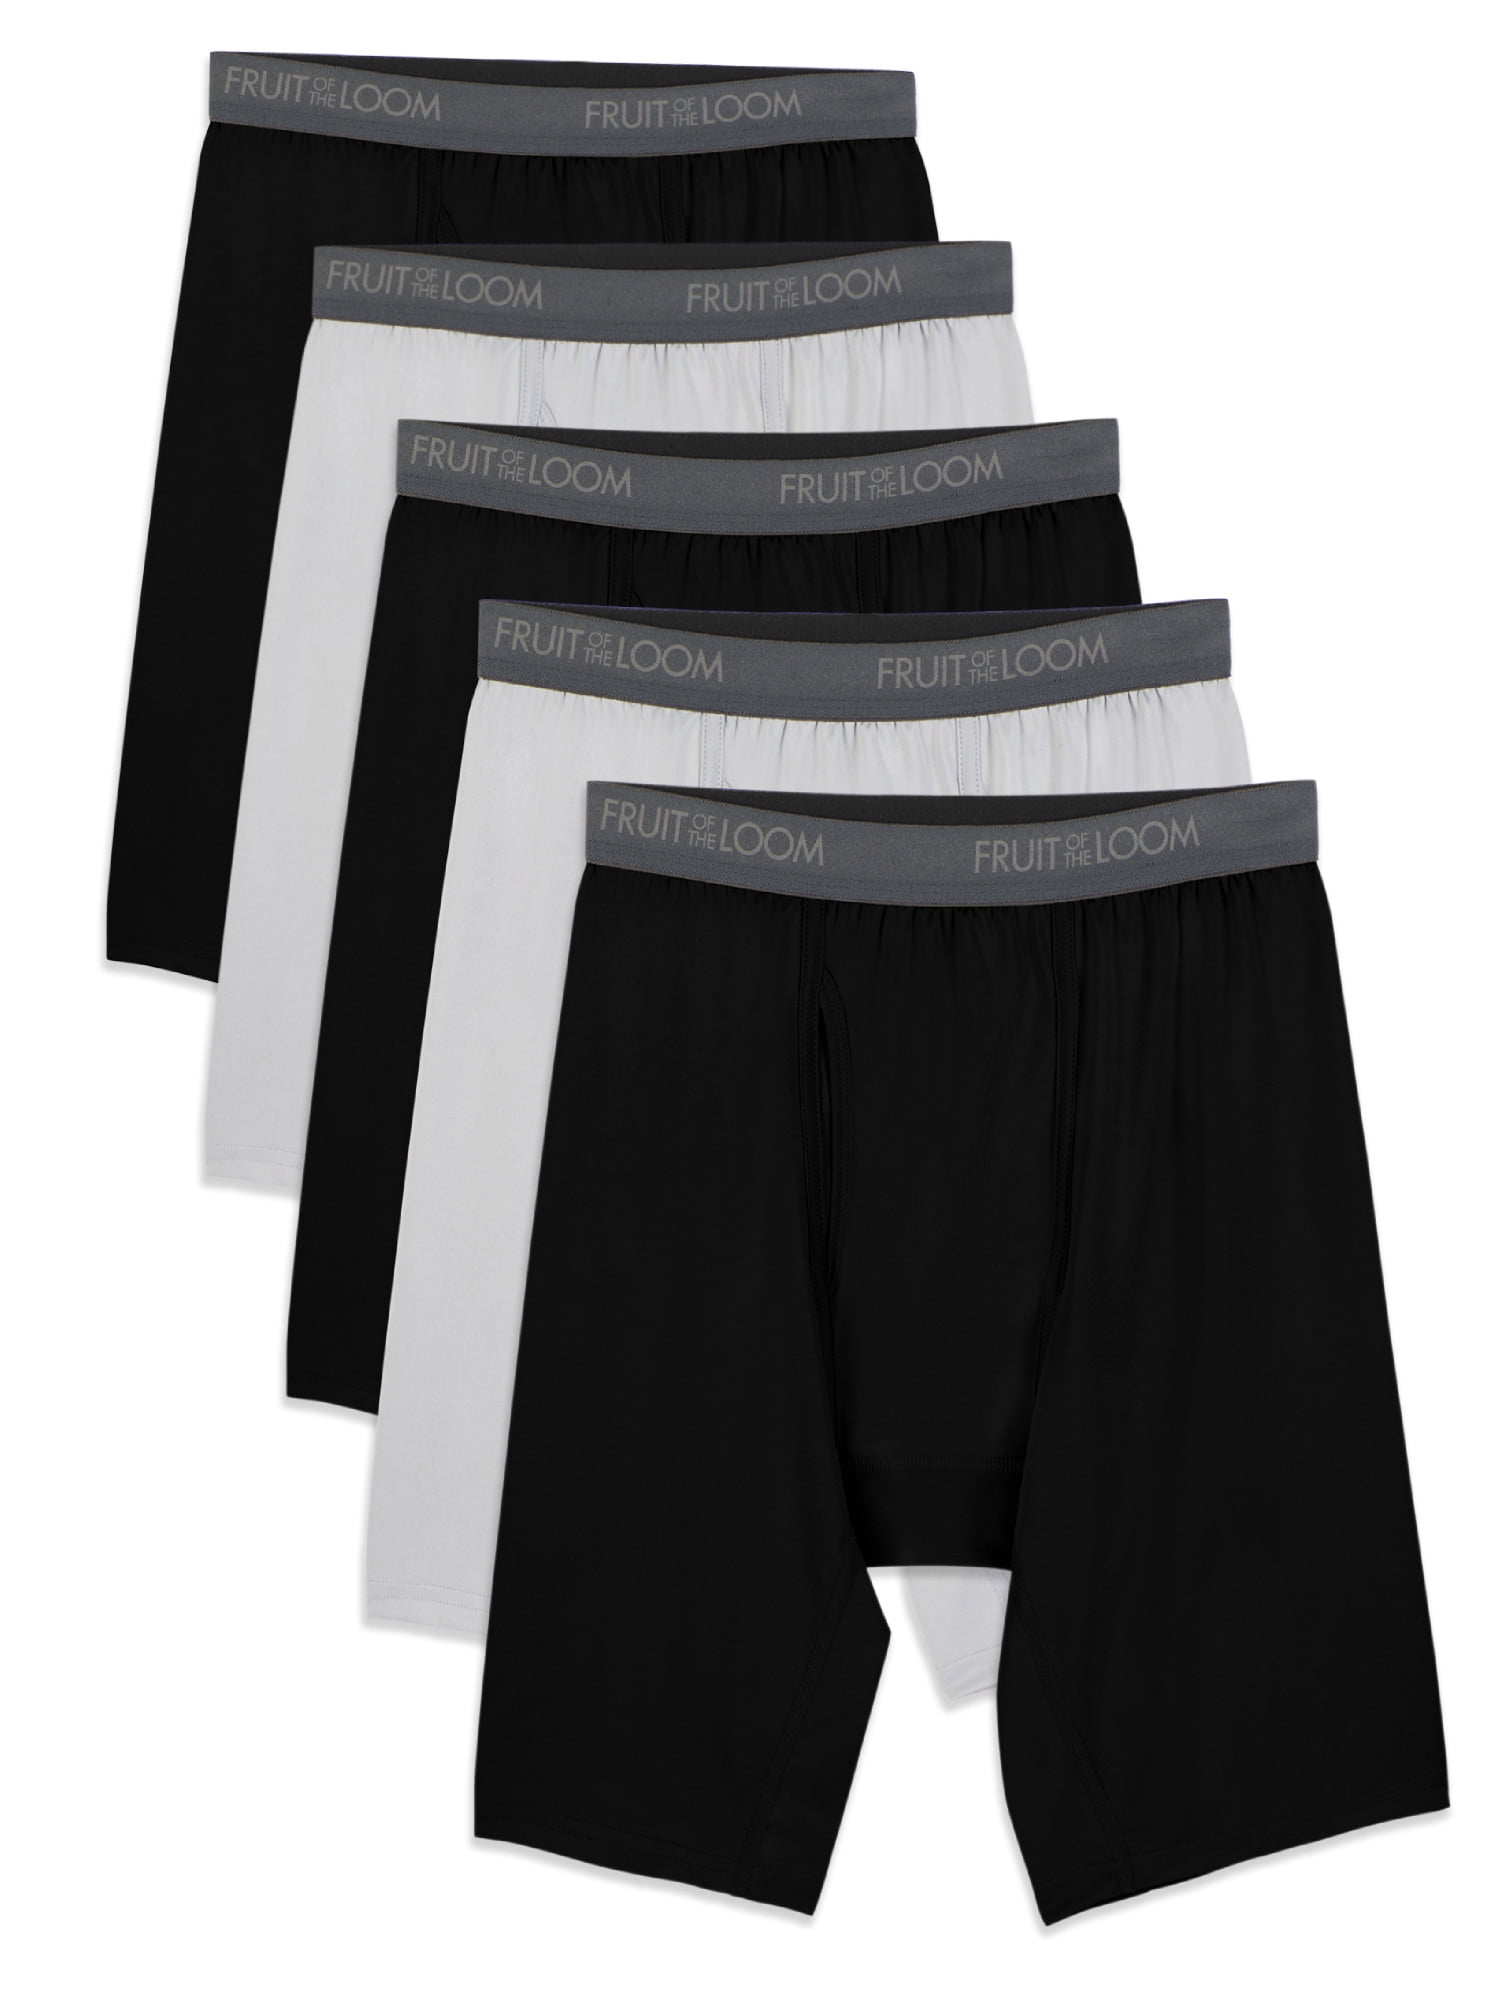 Essentials Mens Big & Tall 5-Pack Tag-Free Boxer Briefs Underwear 5XL -Black/Charcoal/Heather Gray